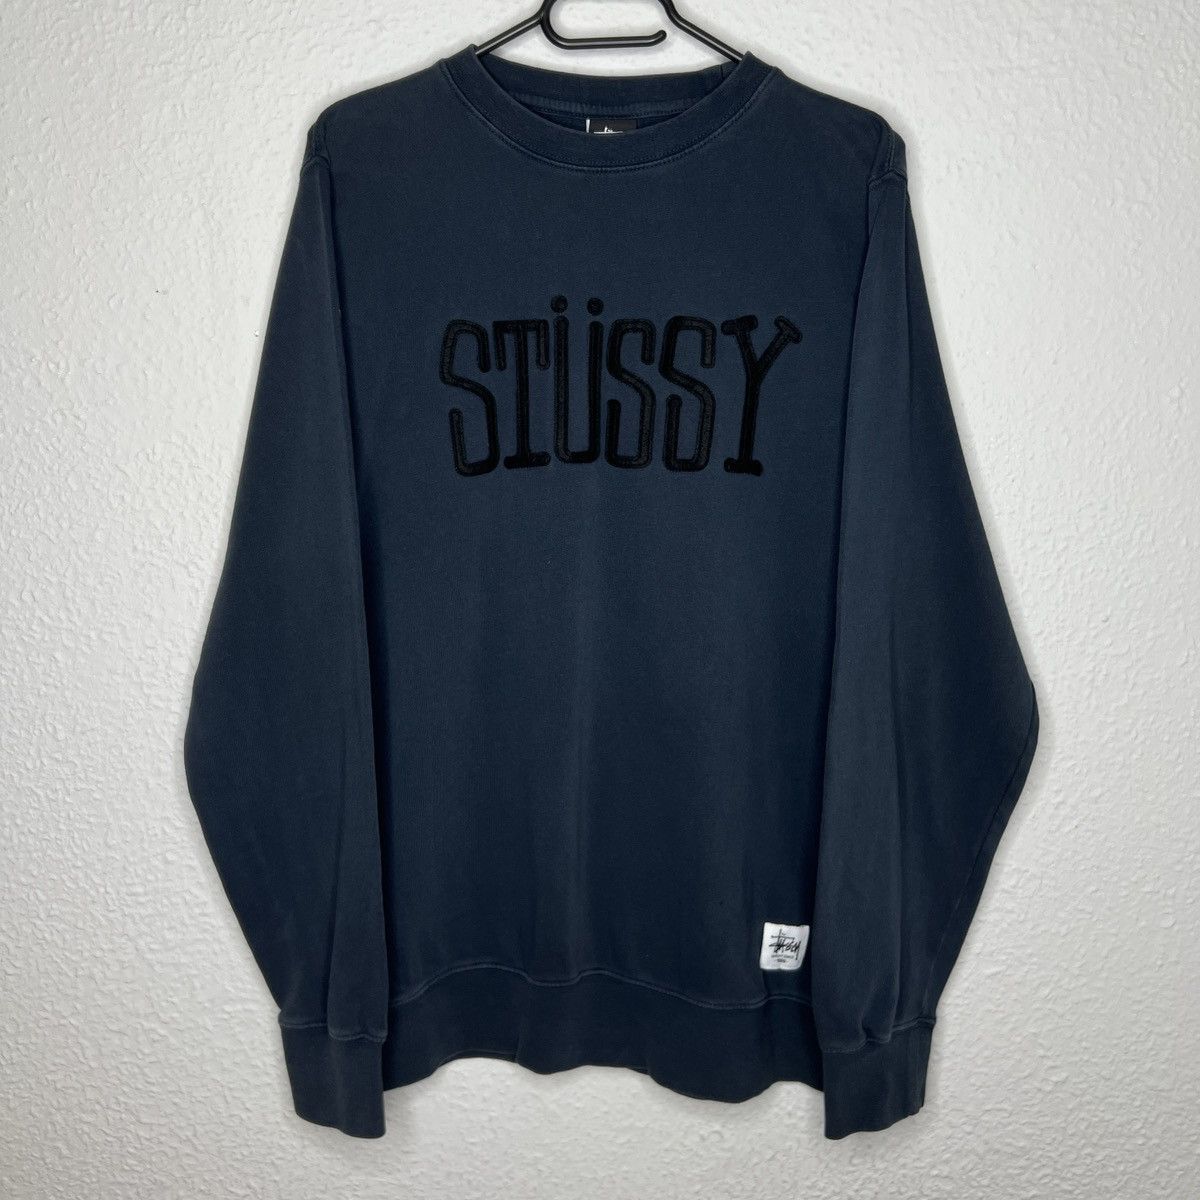 Pre-owned Stussy X Vintage Stussy Crewneck Pullover Sweatshirt Navy Big Logo Spellout